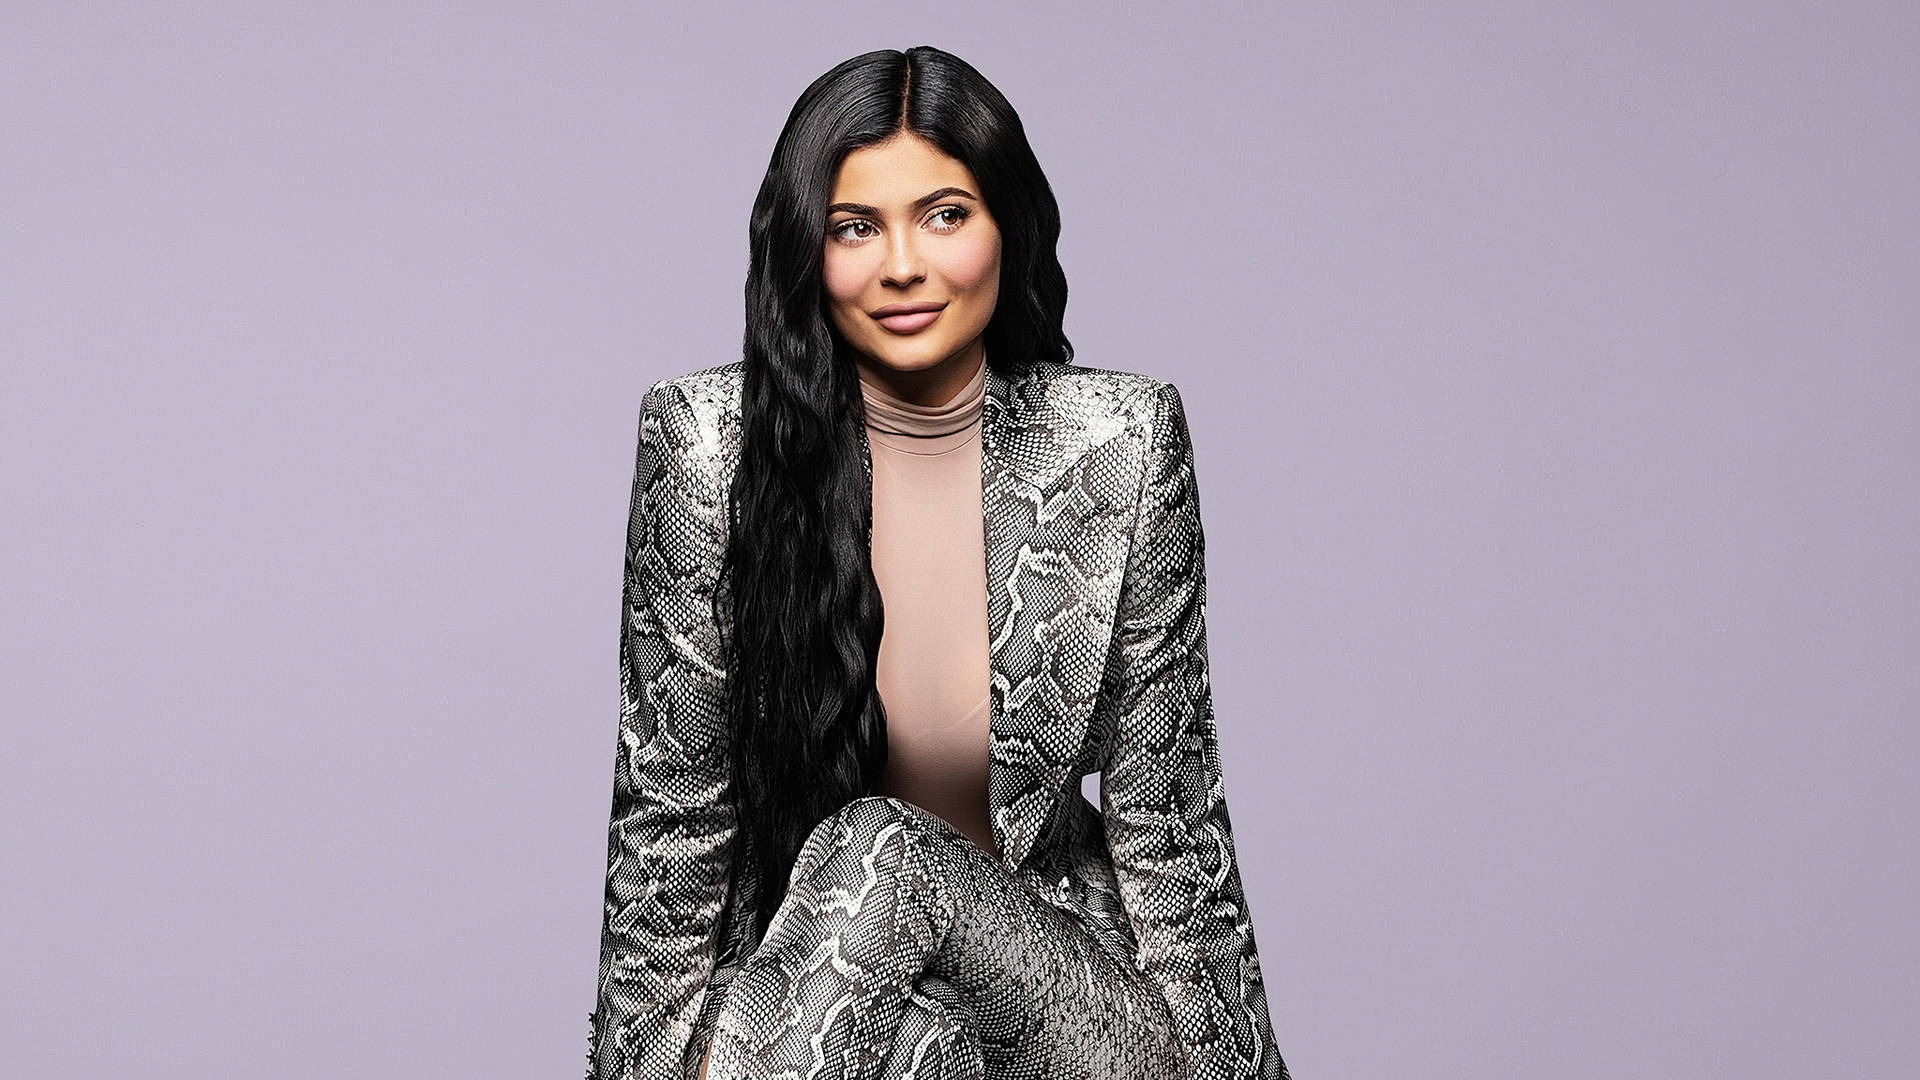 Sitting Kylie Jenner In Snakeskin Suit Wallpaper